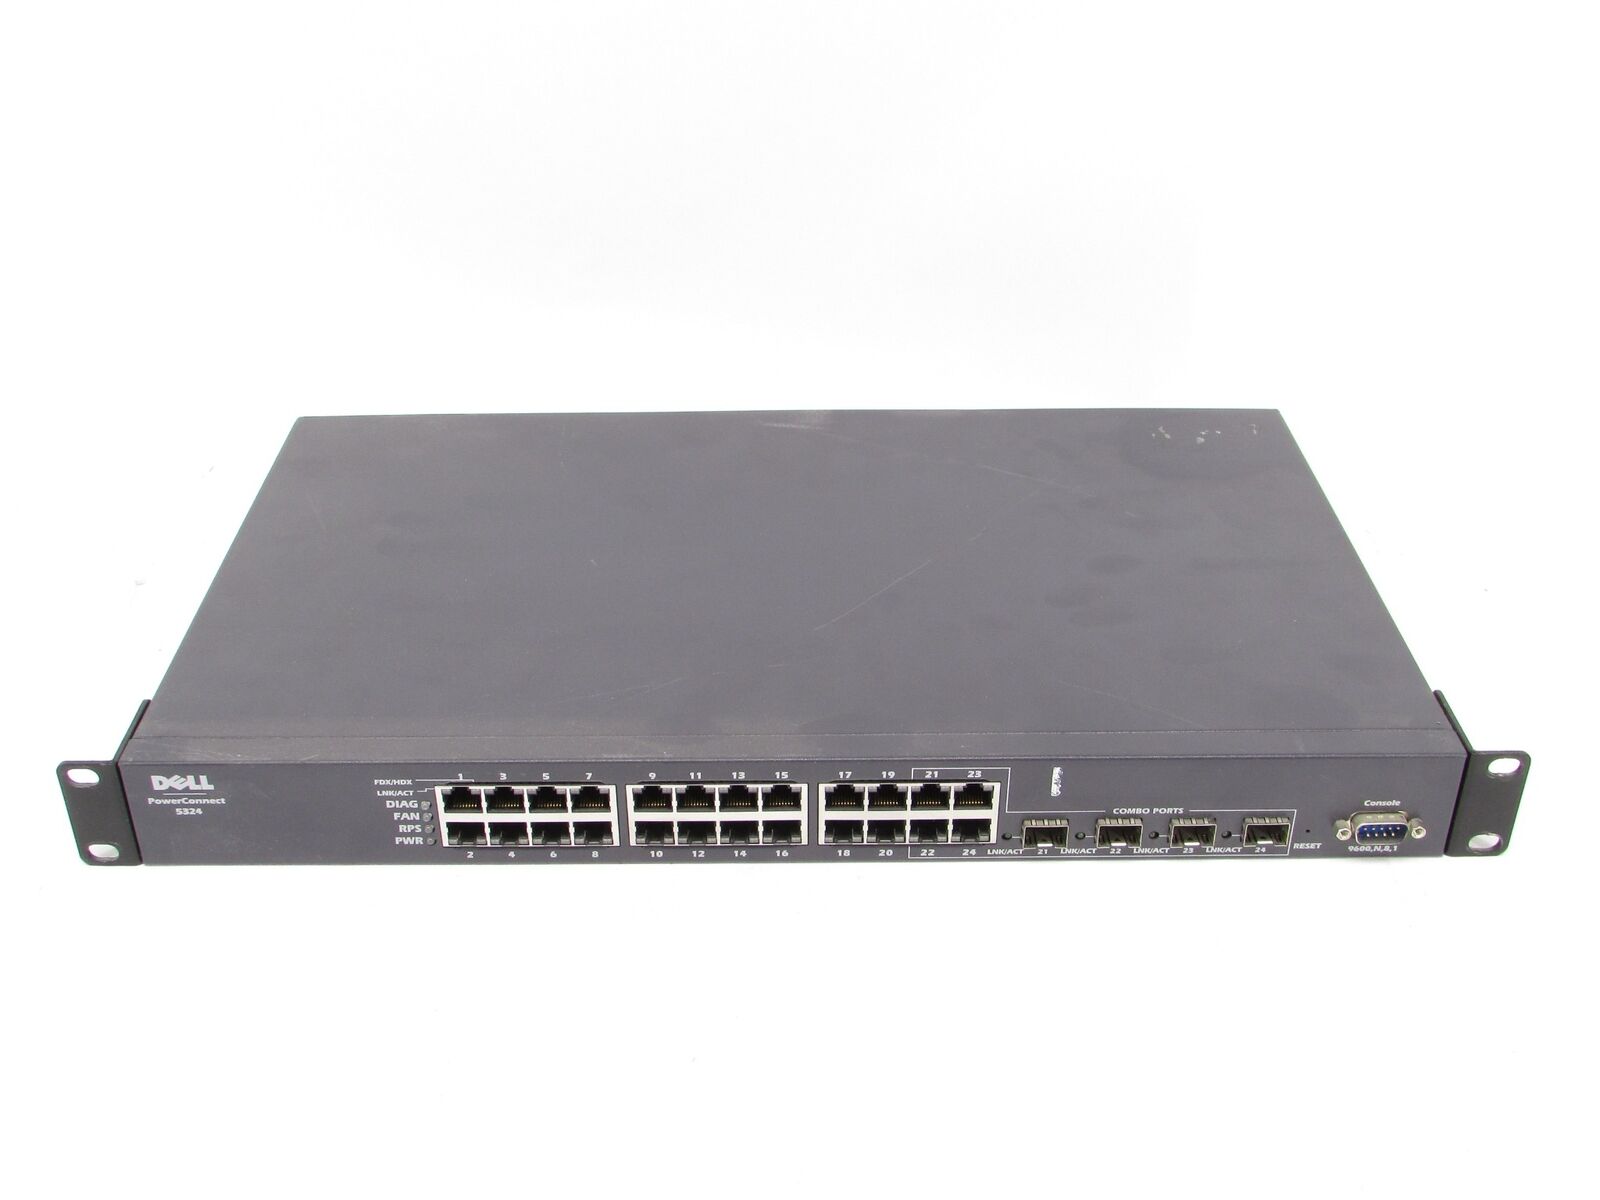 Dell PowerConnect 5324 24-Port 10/100/1000 4 SFP L2 Gigabit Network Switch